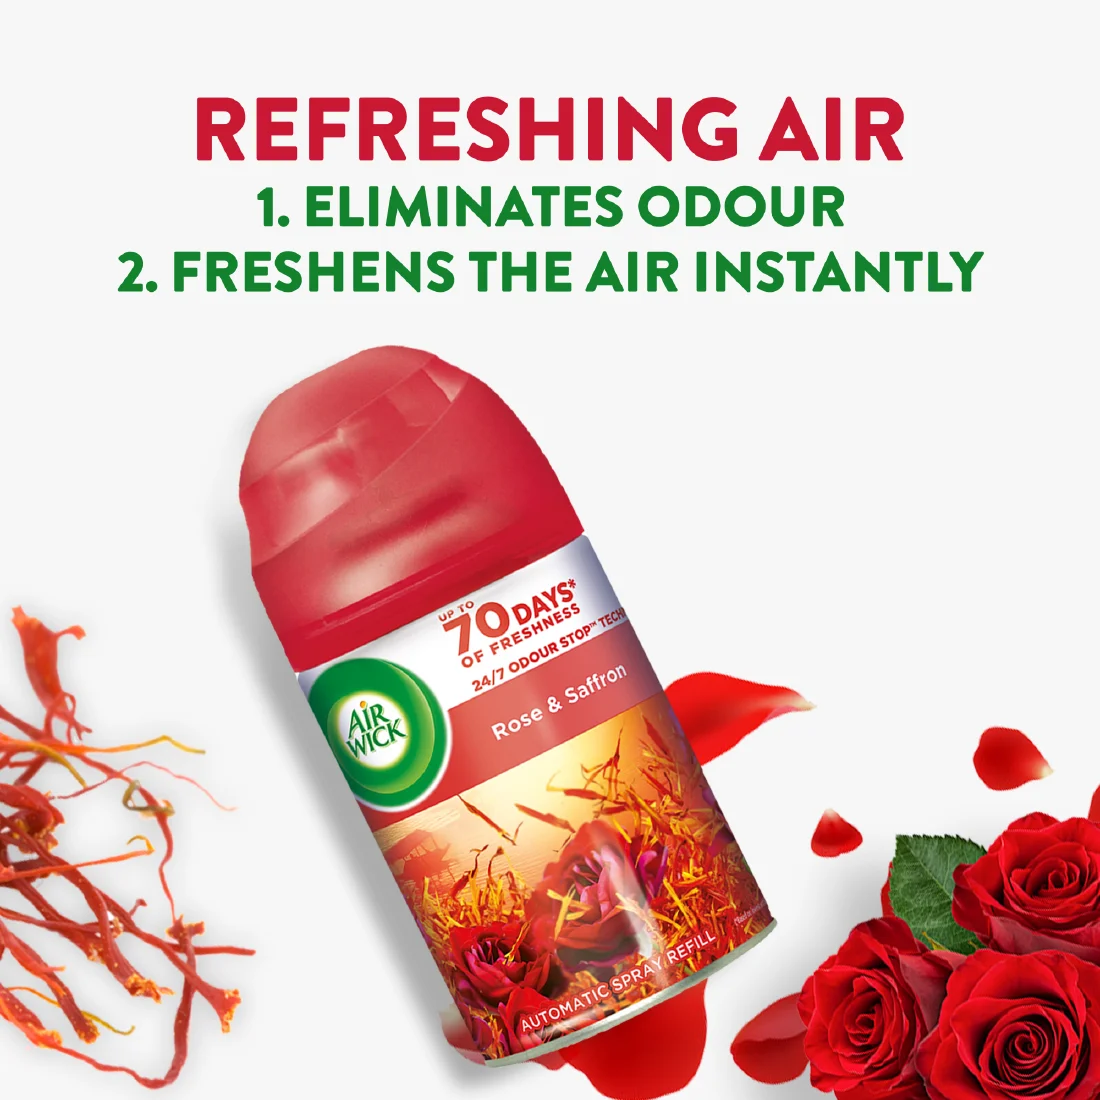 Air Wick Freshmatic Refill, Aromas of Kashmir, Rose & Saffron